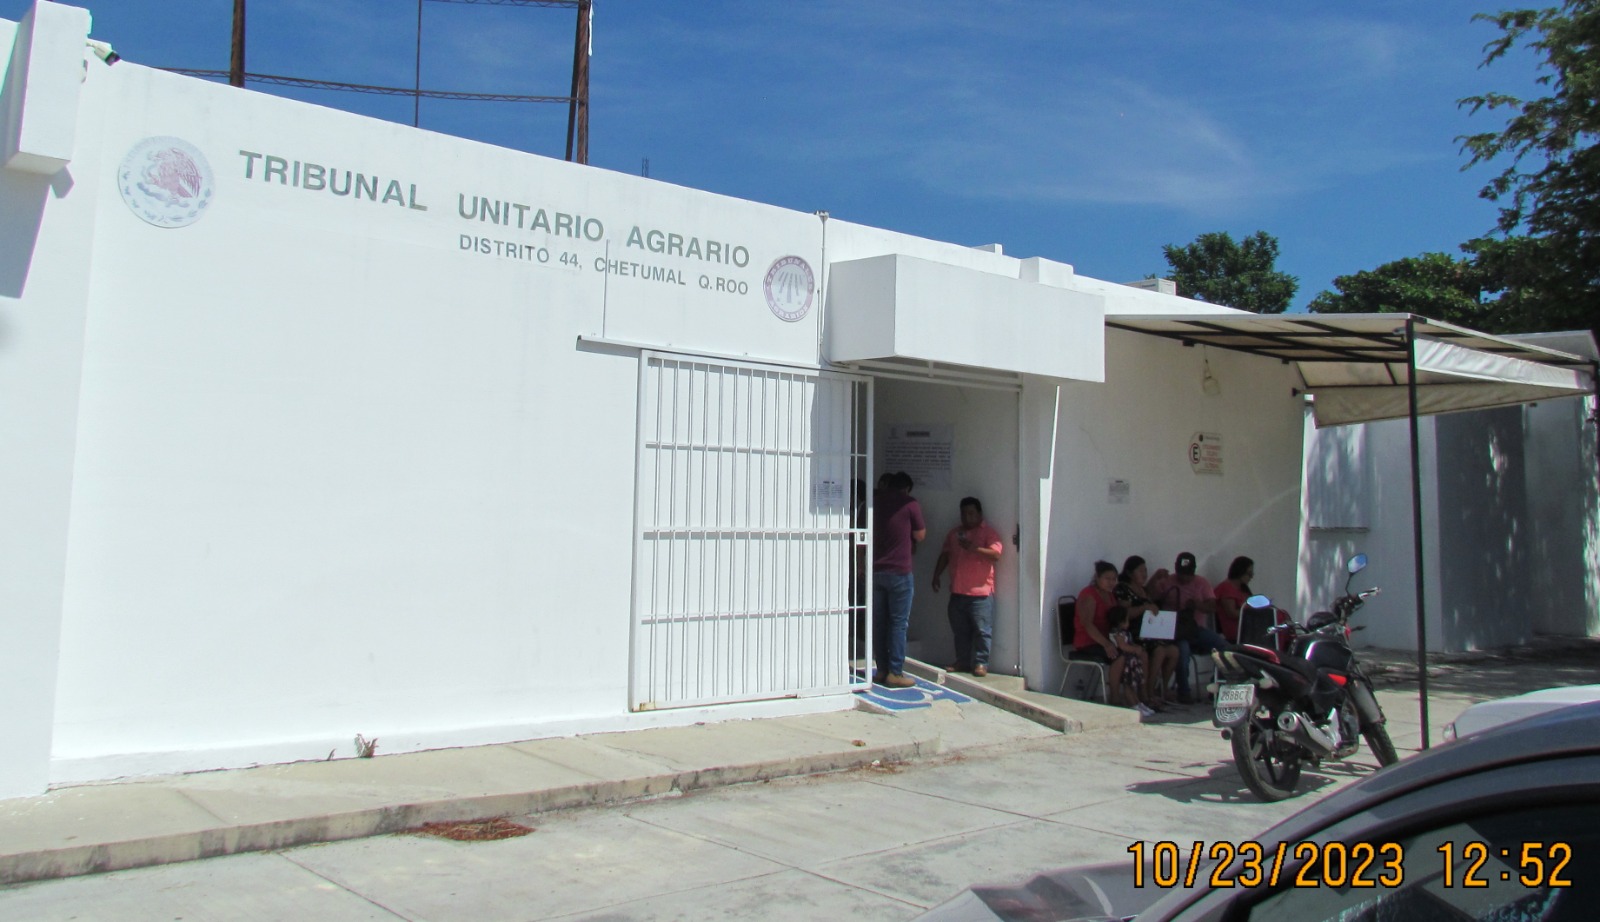 Tribunal Unitario Agrario con sede en Chetumal